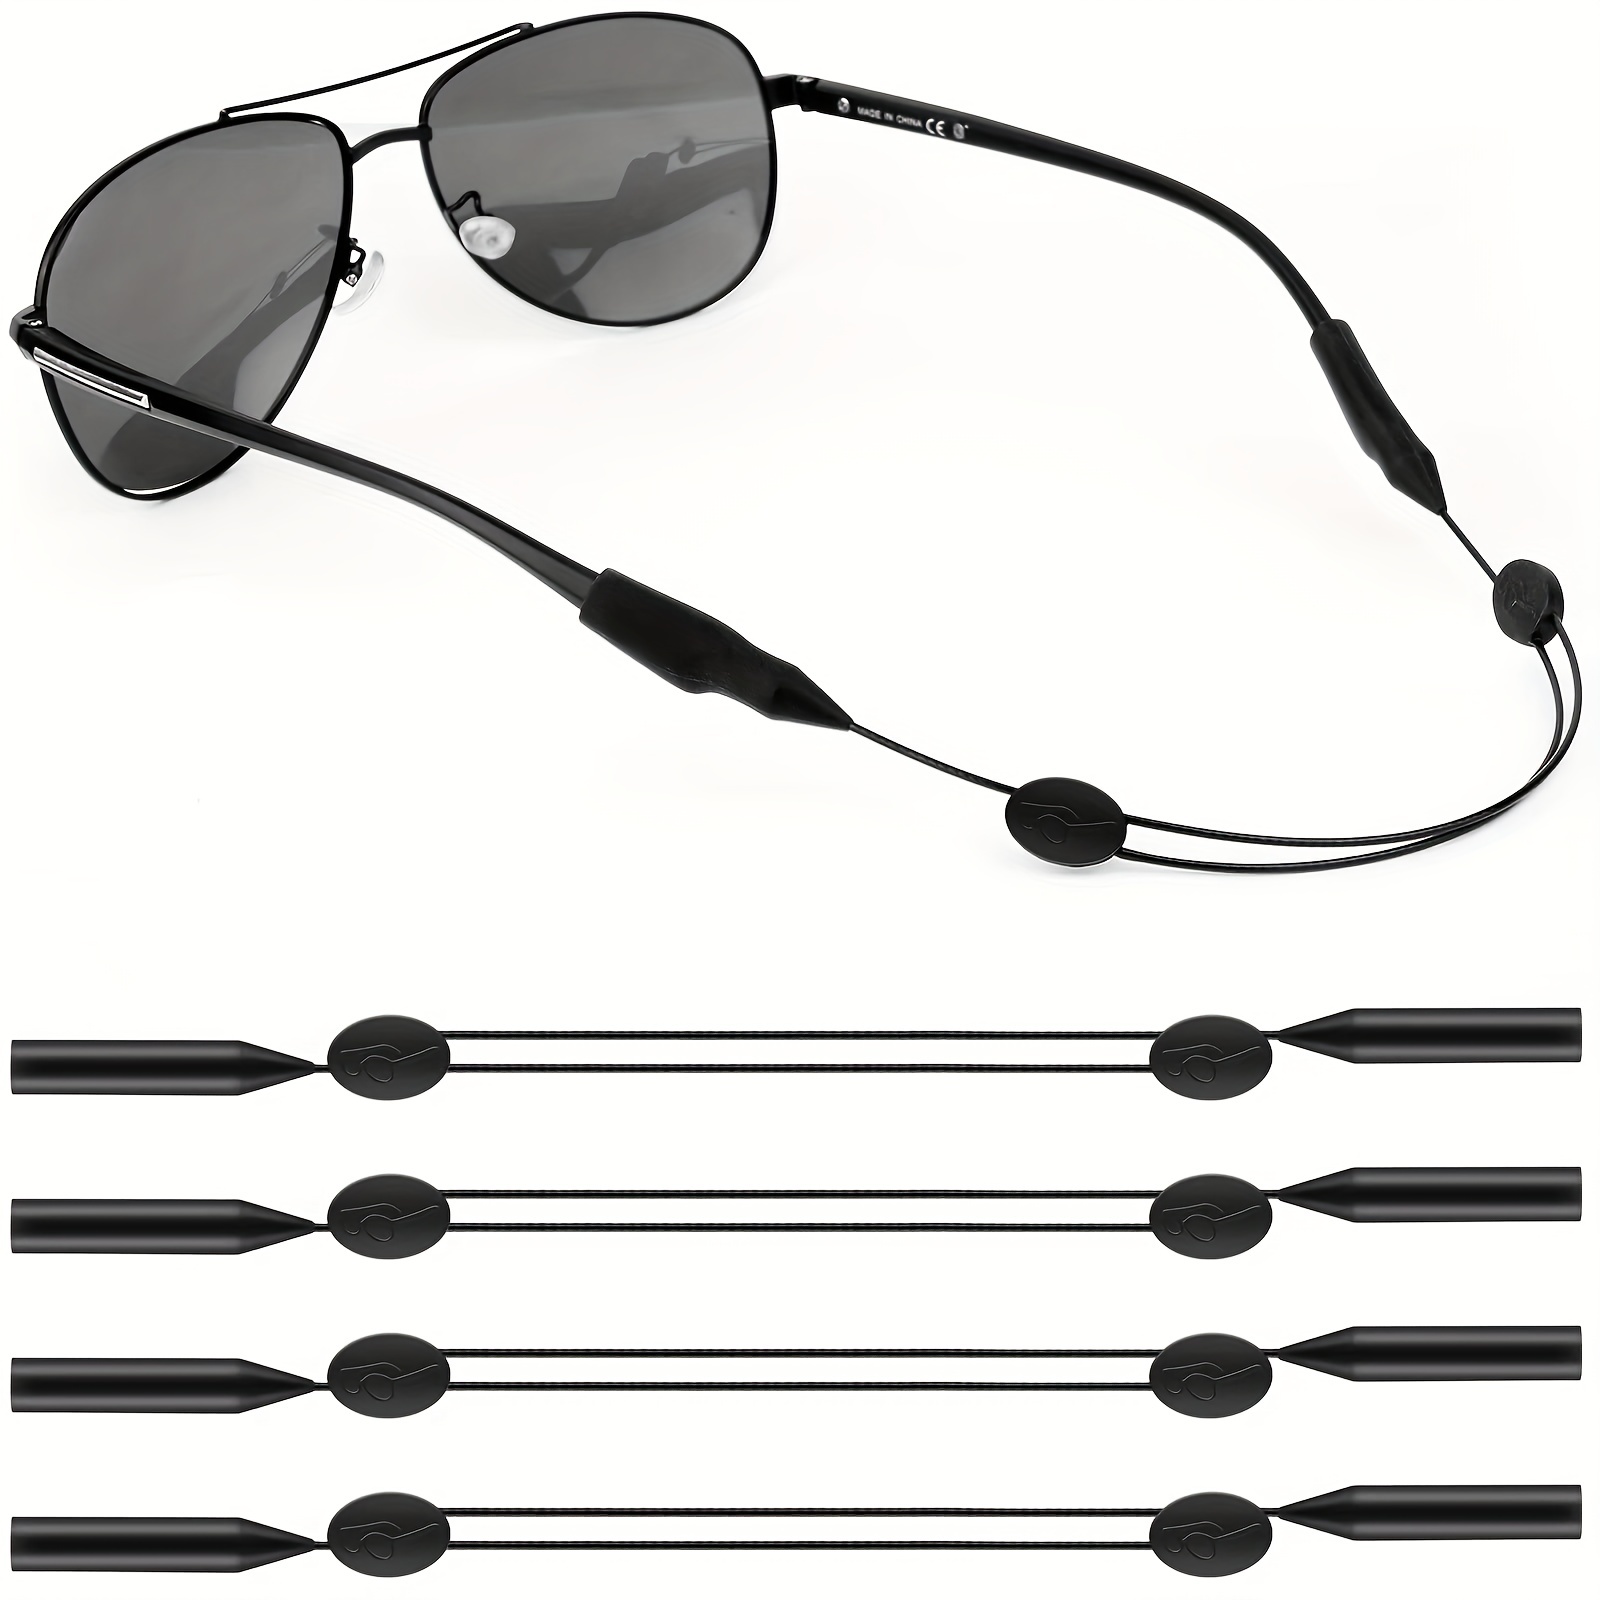 Glasses Strap - 3 Pcs Large Adjustable Eyeglass Strap & 2 Pcs Glasses Cloth  Set - Sports Sunglasses & Eyeglasses Holder Straps for Men Women,Eye